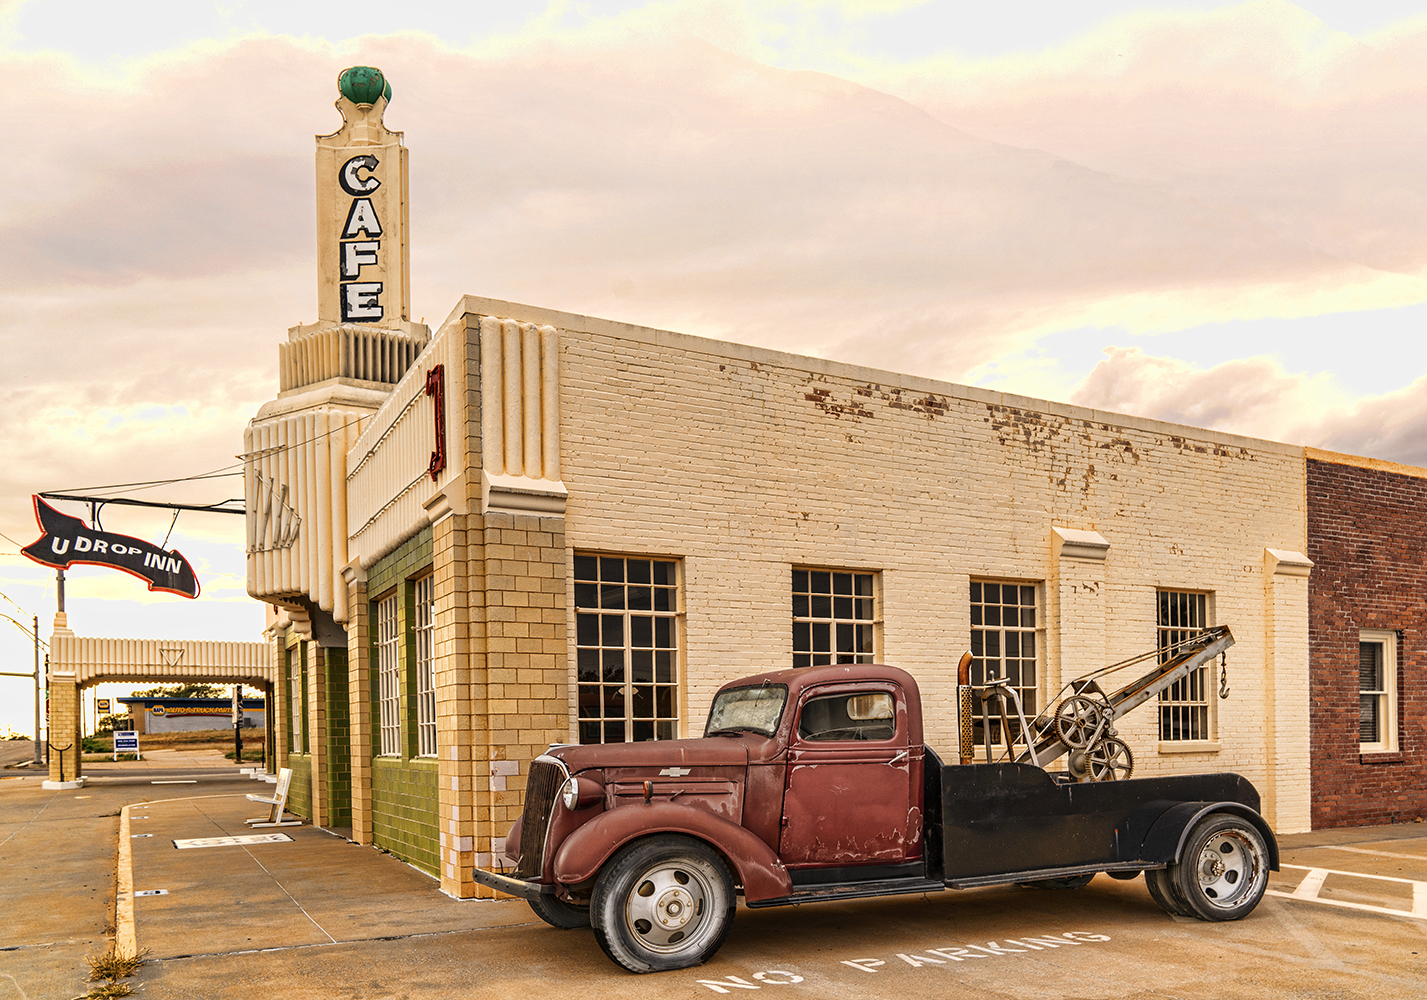 1937 Chevy, Shamrock, Texas